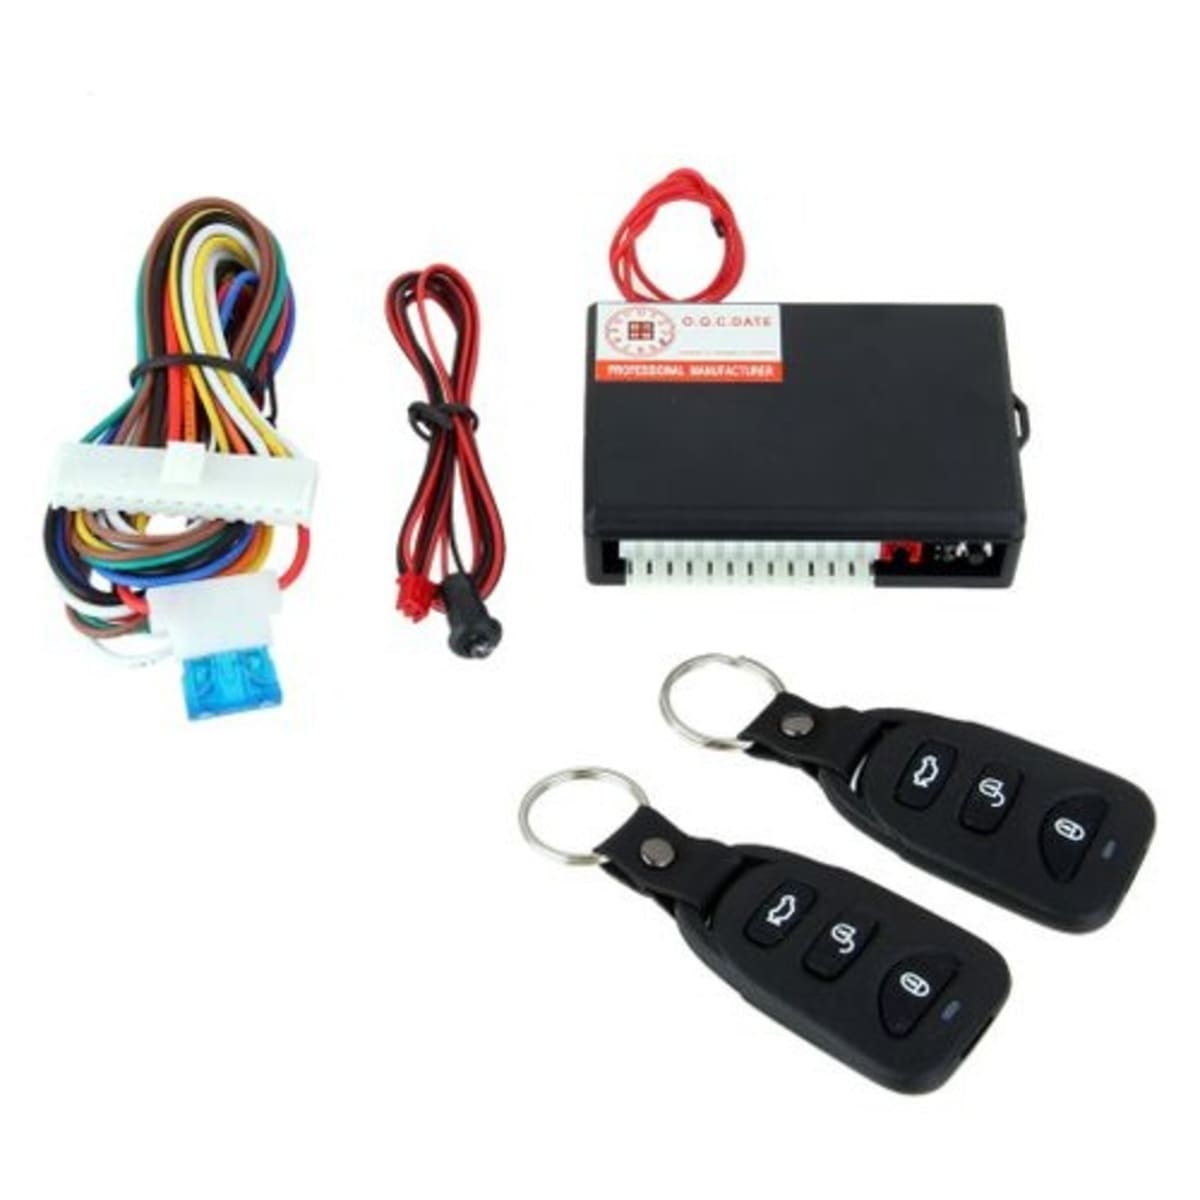 Universal Car Remote Central Kit Door Lock Vehicle Keyless Entry